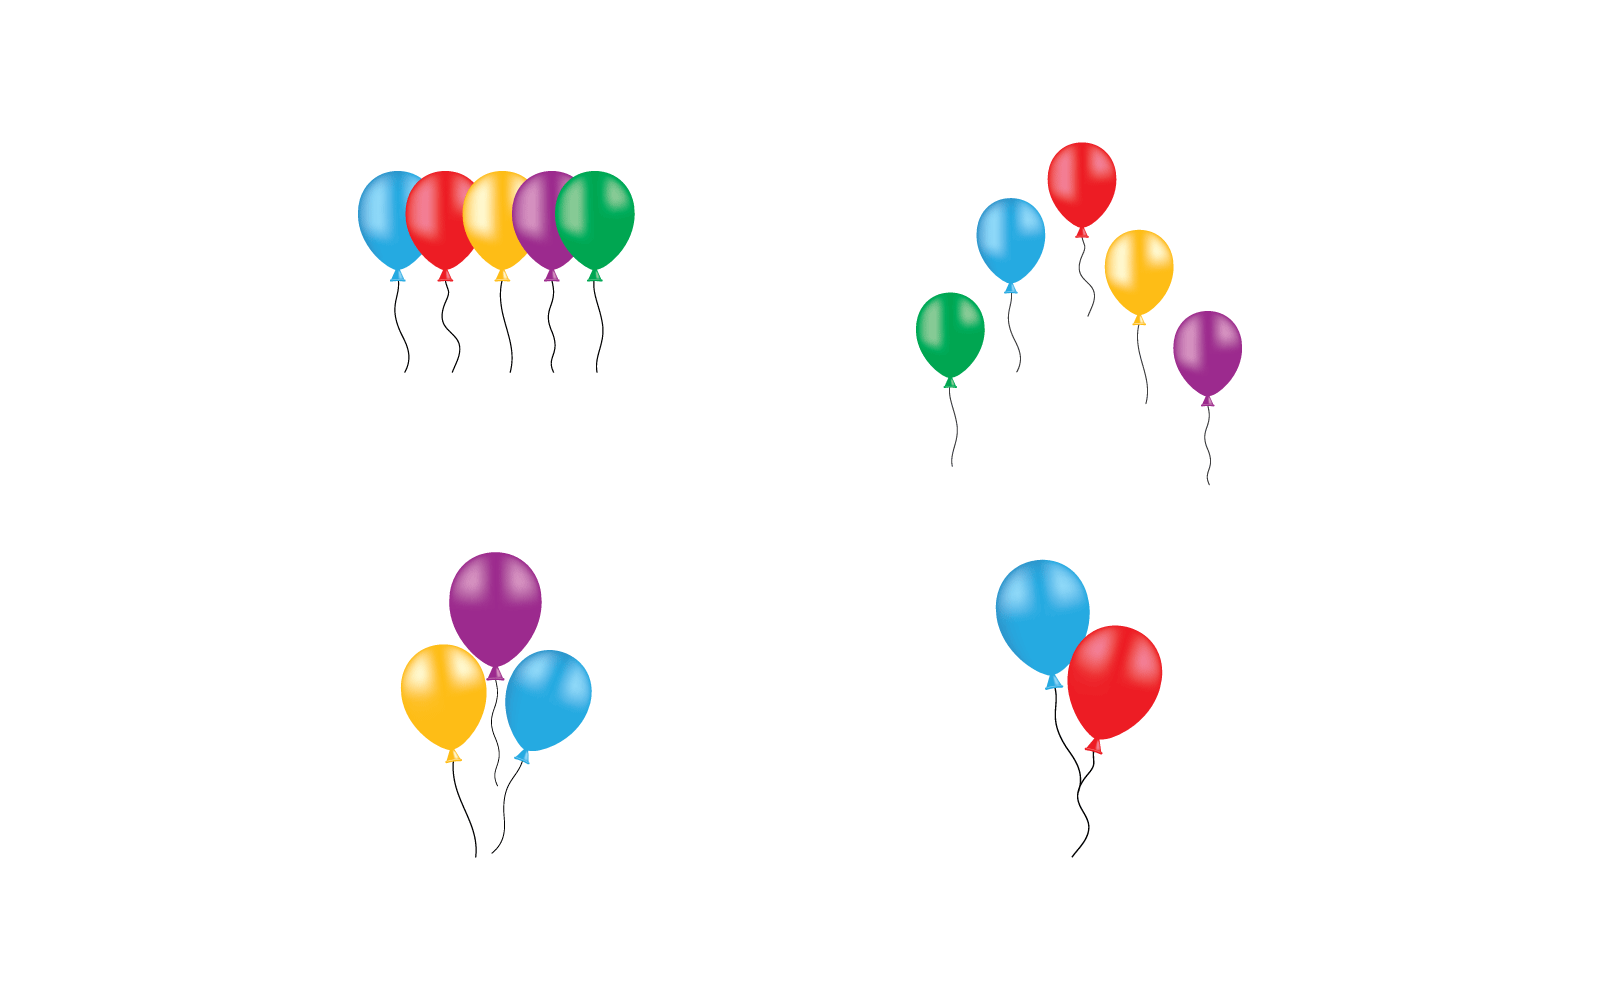 Realistic balloon illustration on white background